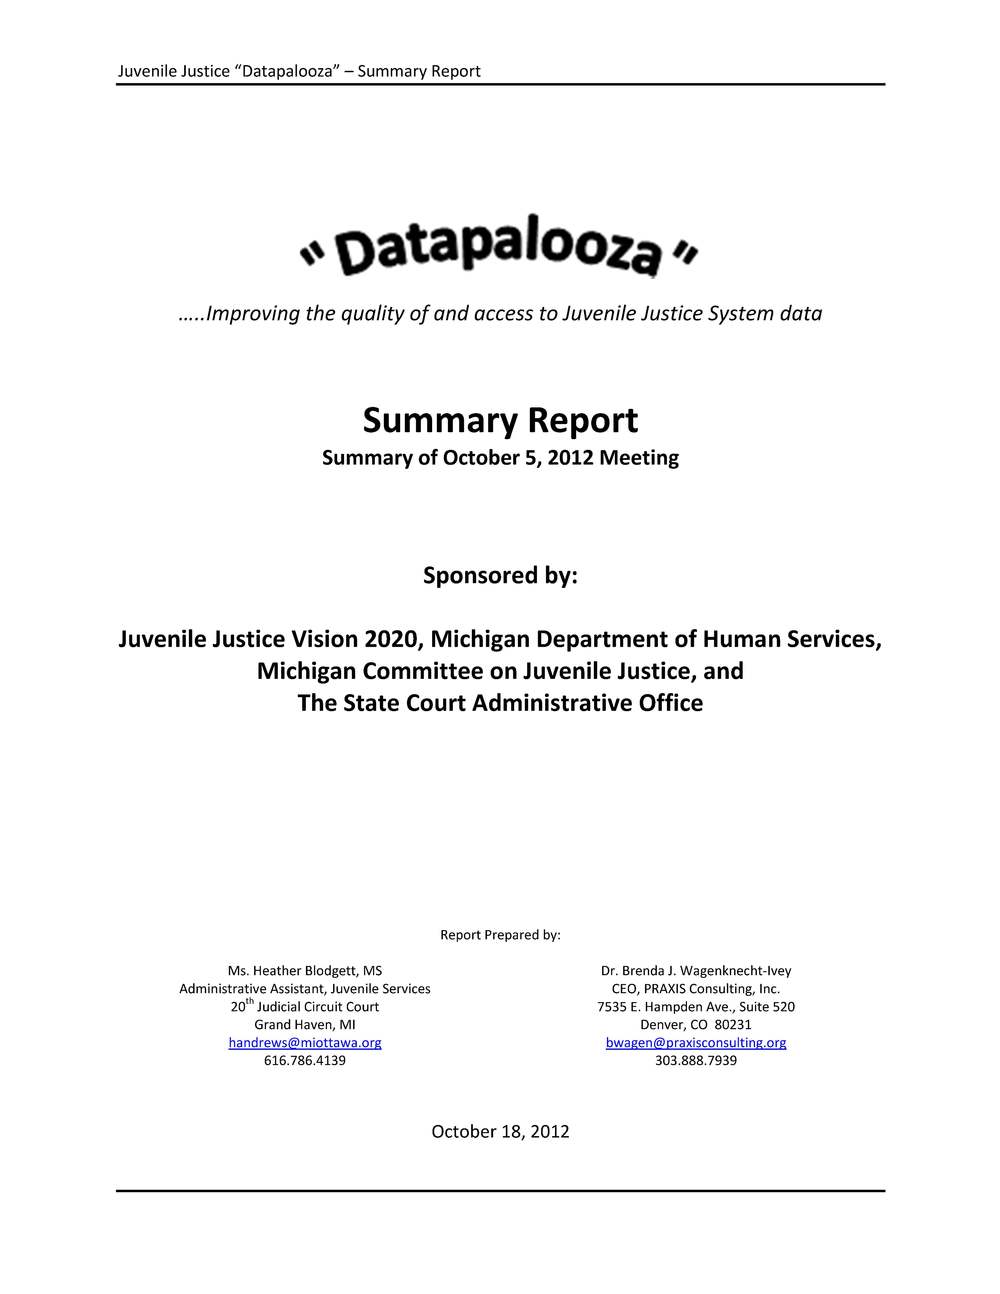 Datapalooza Report Spotlight